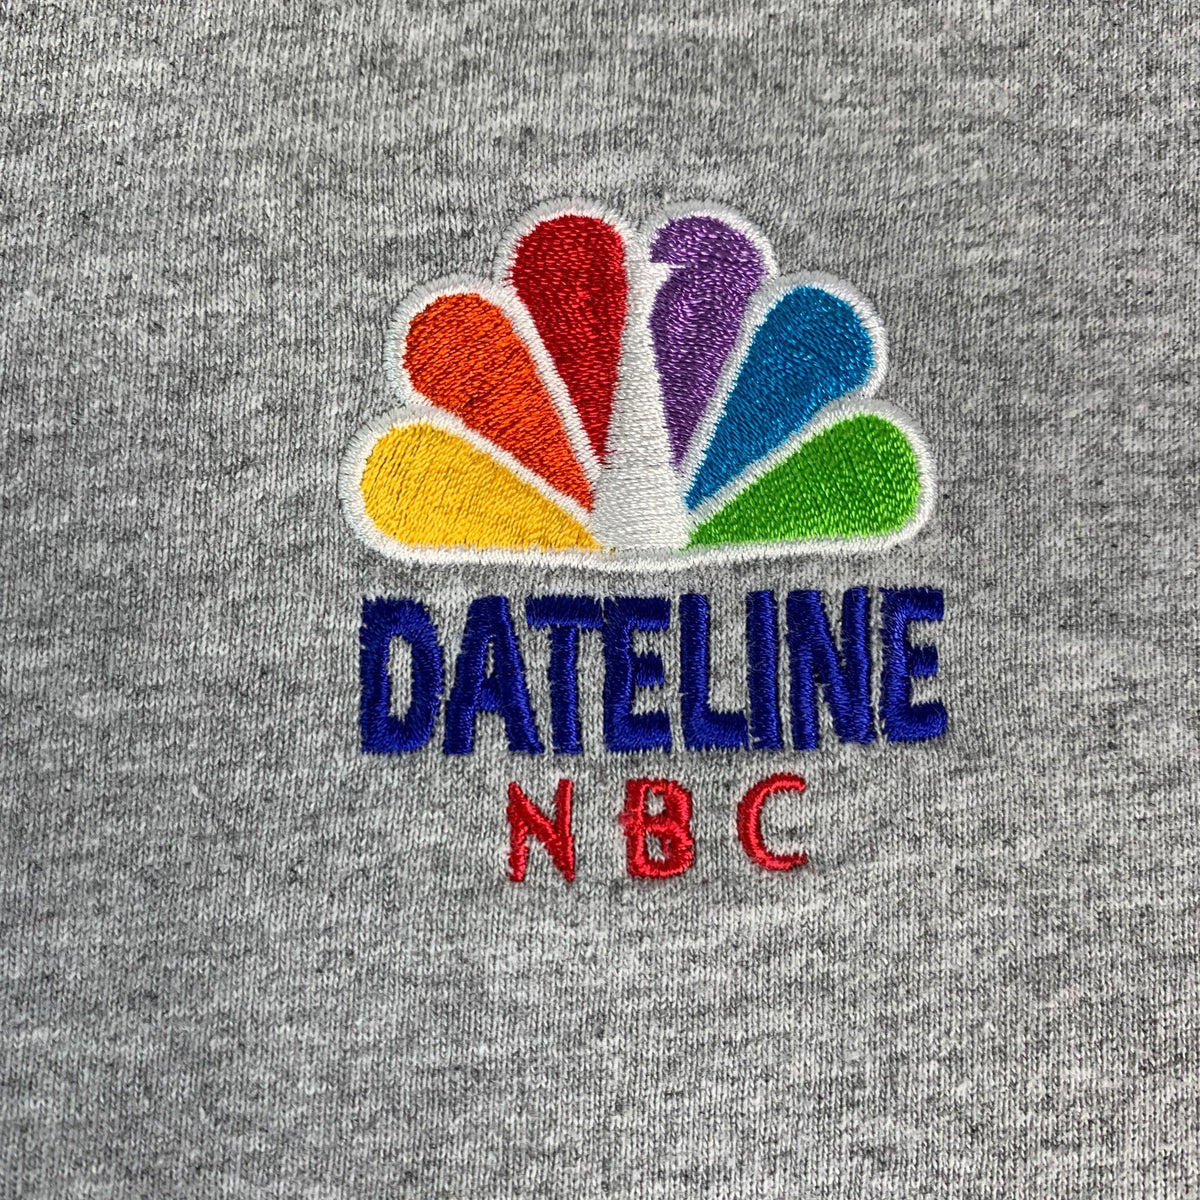 Vintage Dateline &quot;NBC&quot; Embroidered T-Shirt - jointcustodydc